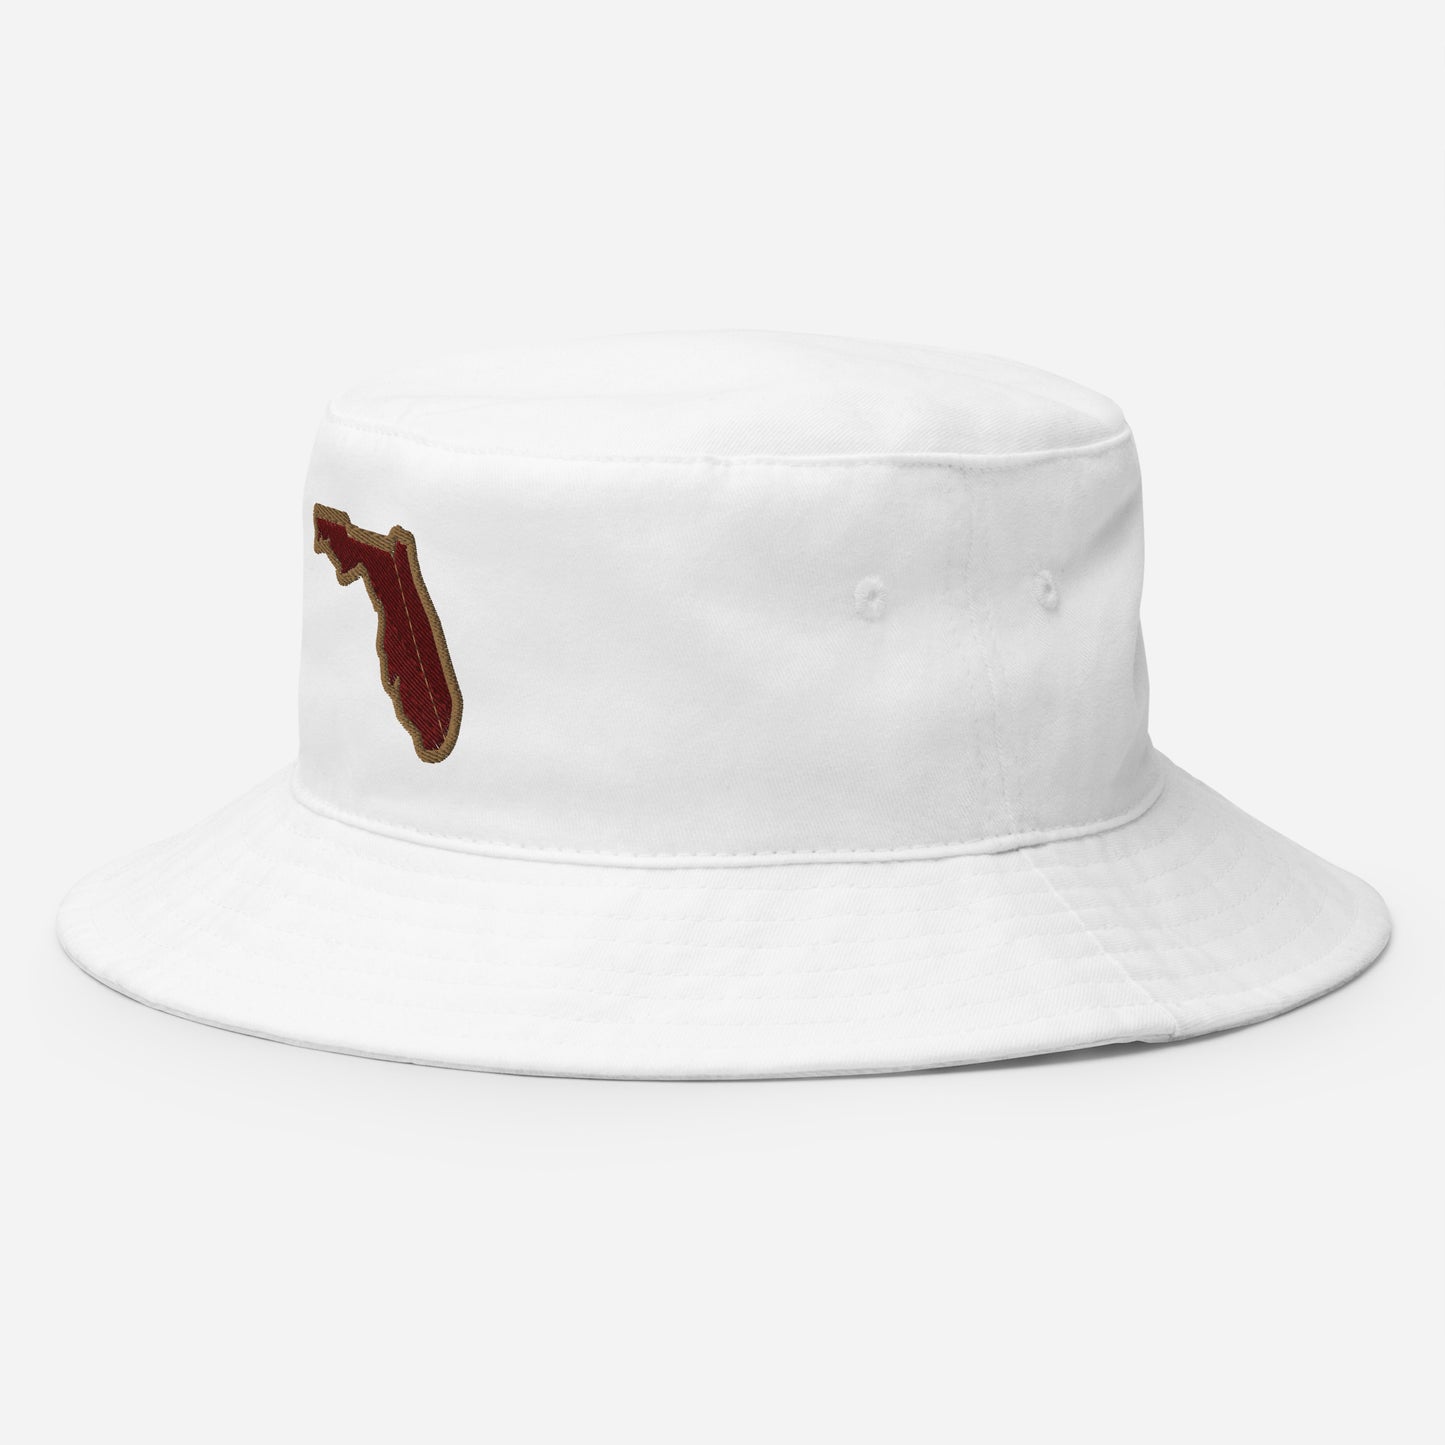 Seminoles Bucket Hat: Florida State